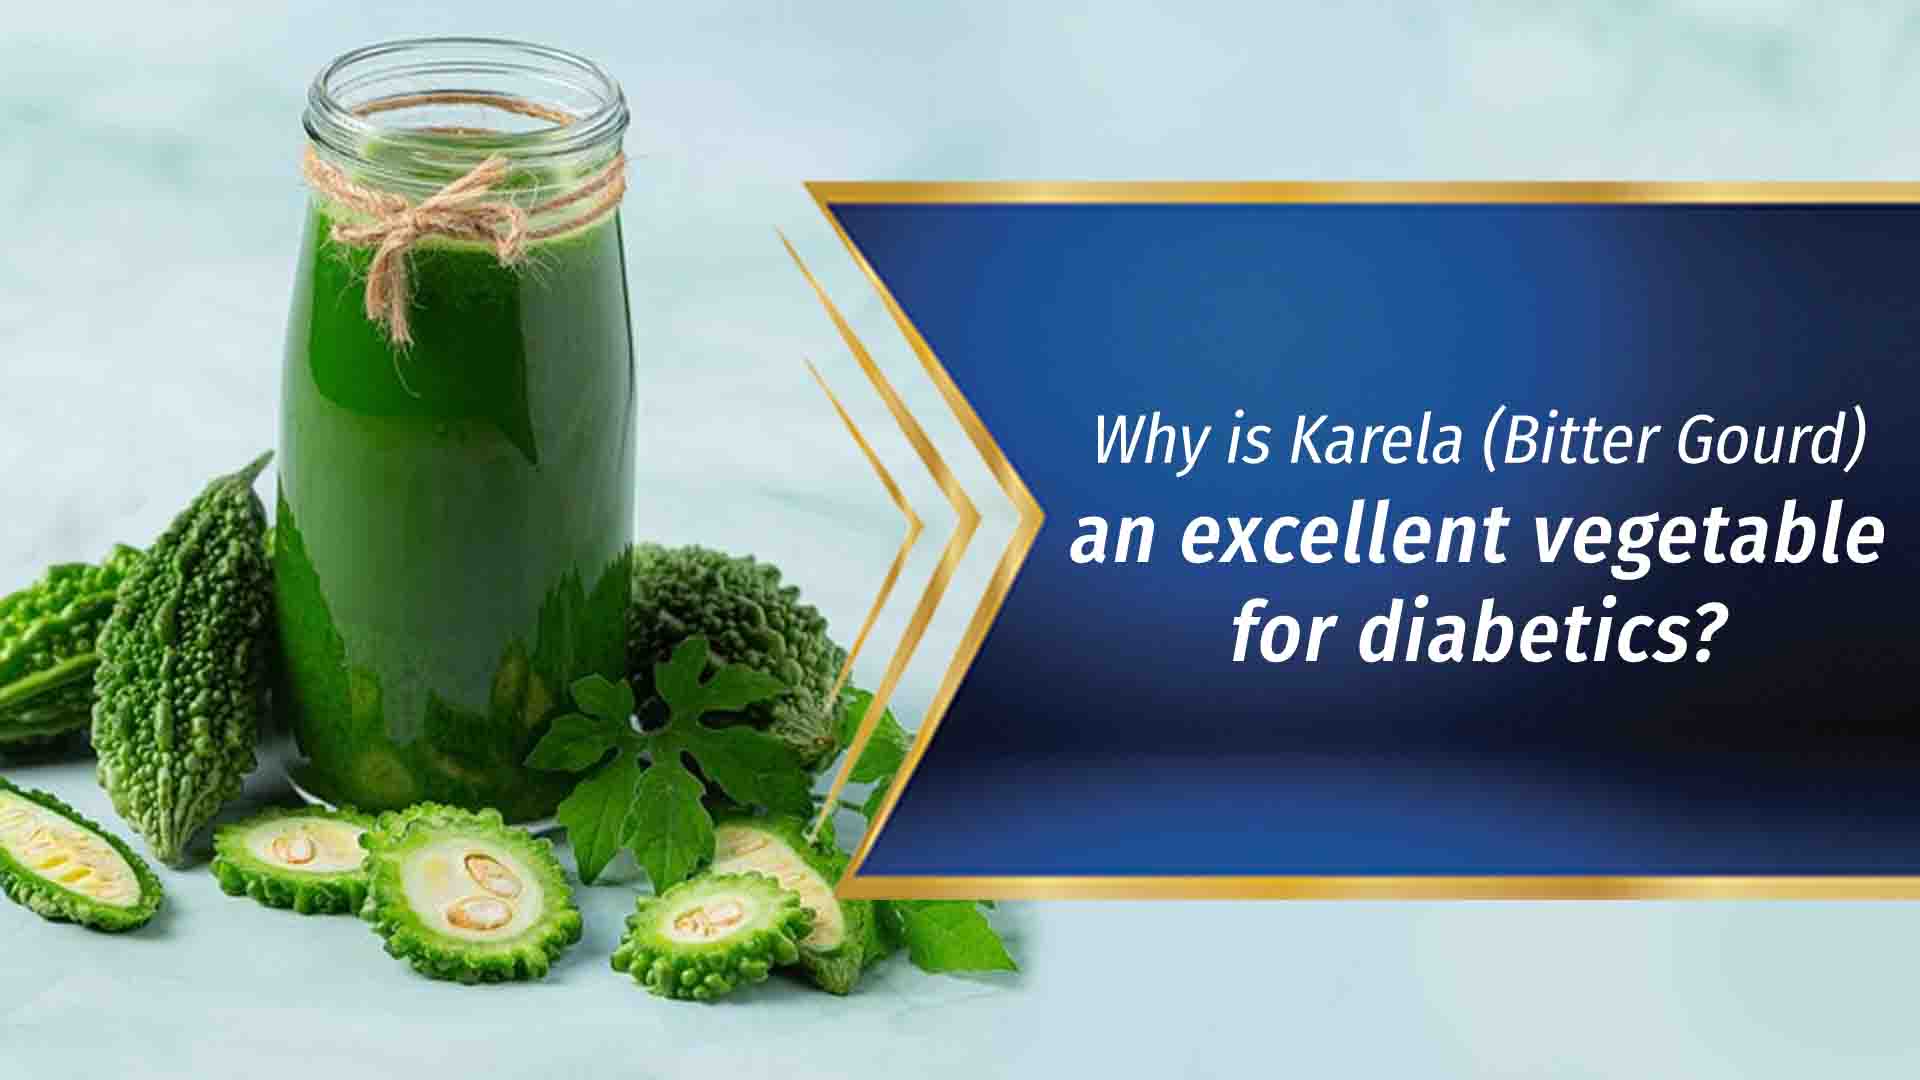 Why is Karela (Bitter Gourd) an excellent vegetable for diabetics?